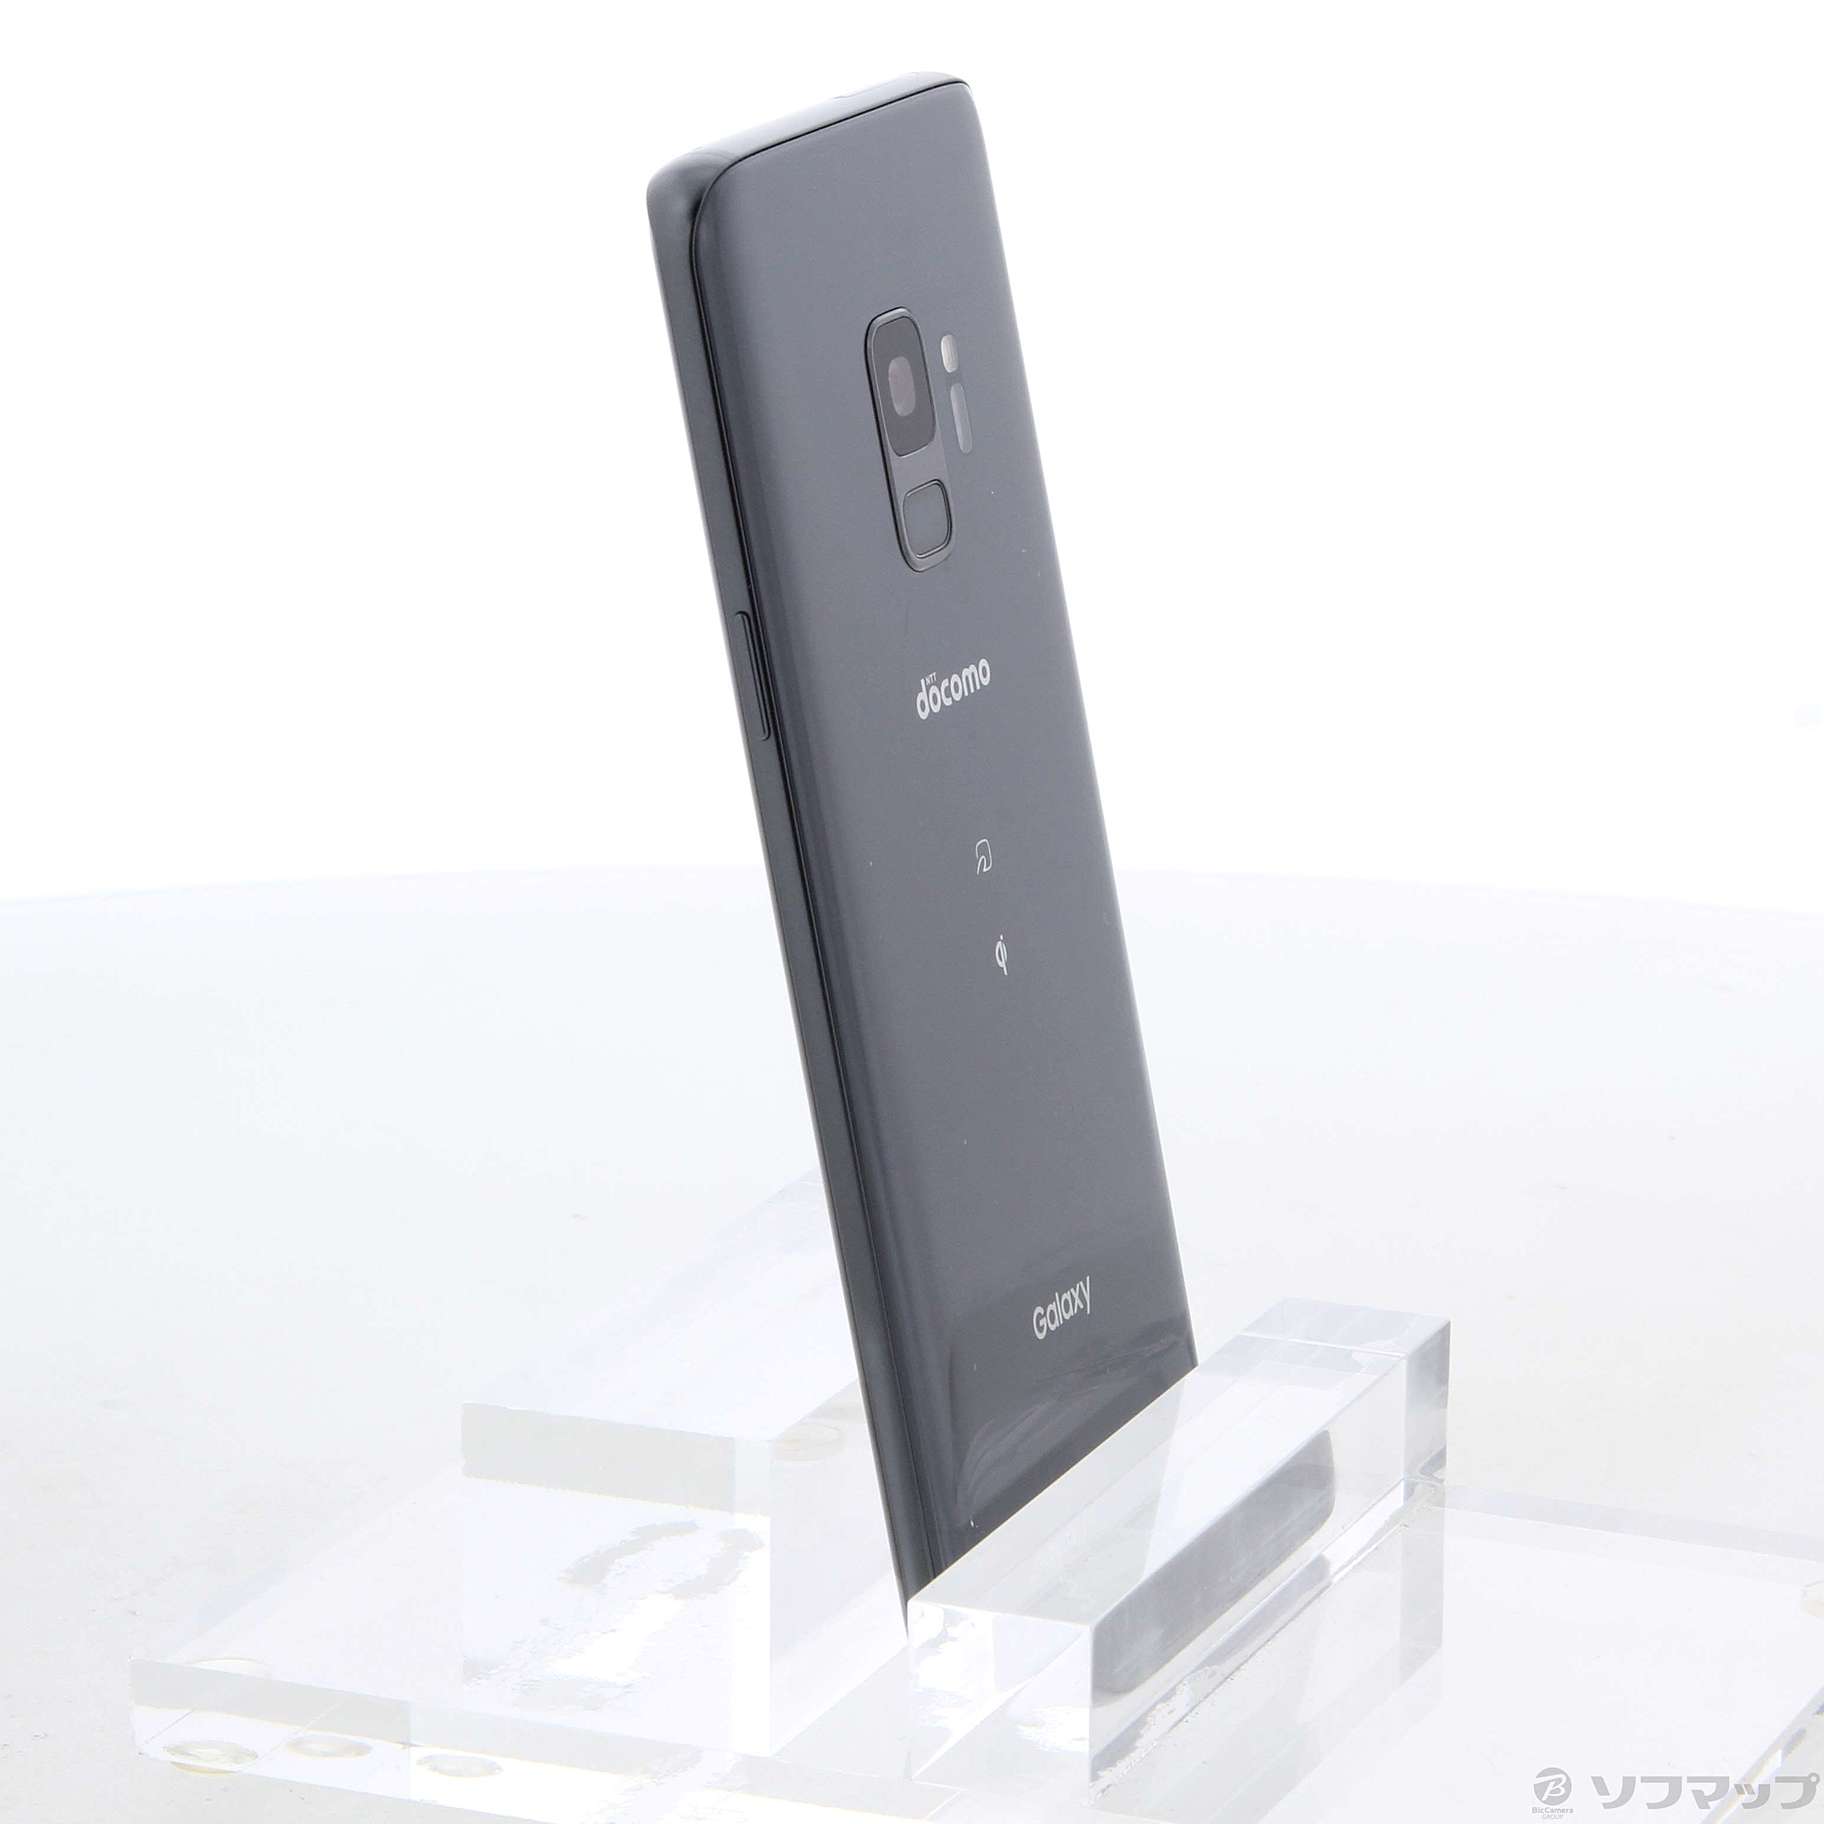 Galaxy S9+ Titanium Gray 64GB ジャンク